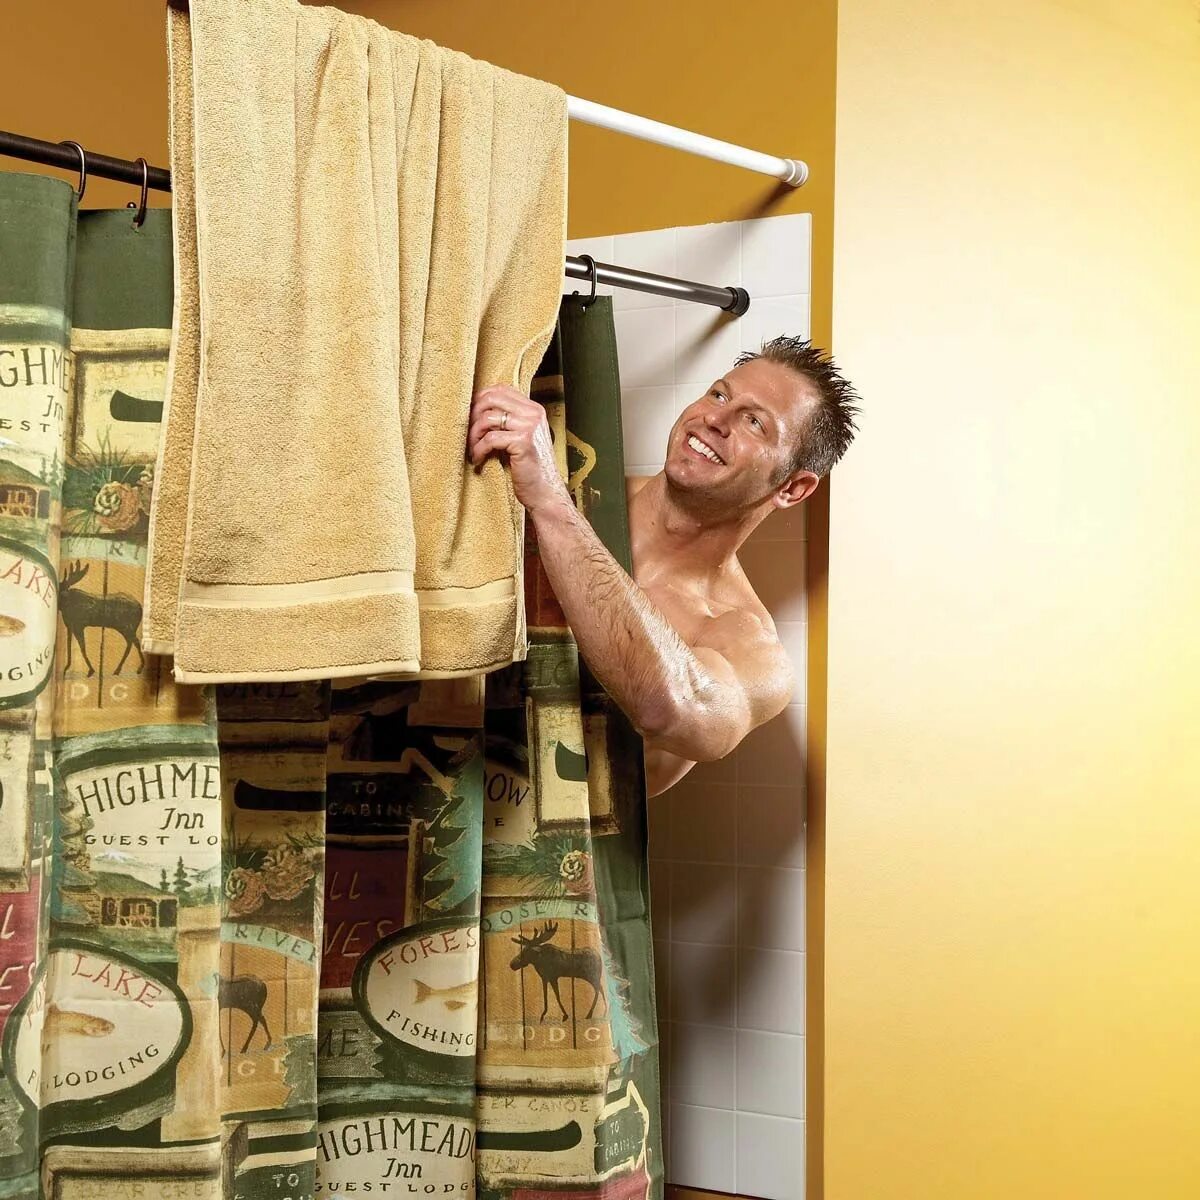 Мужик с полотенцем. Мужчина в ванной в полотенце. Душевая полотенца. Грязное полотенце.